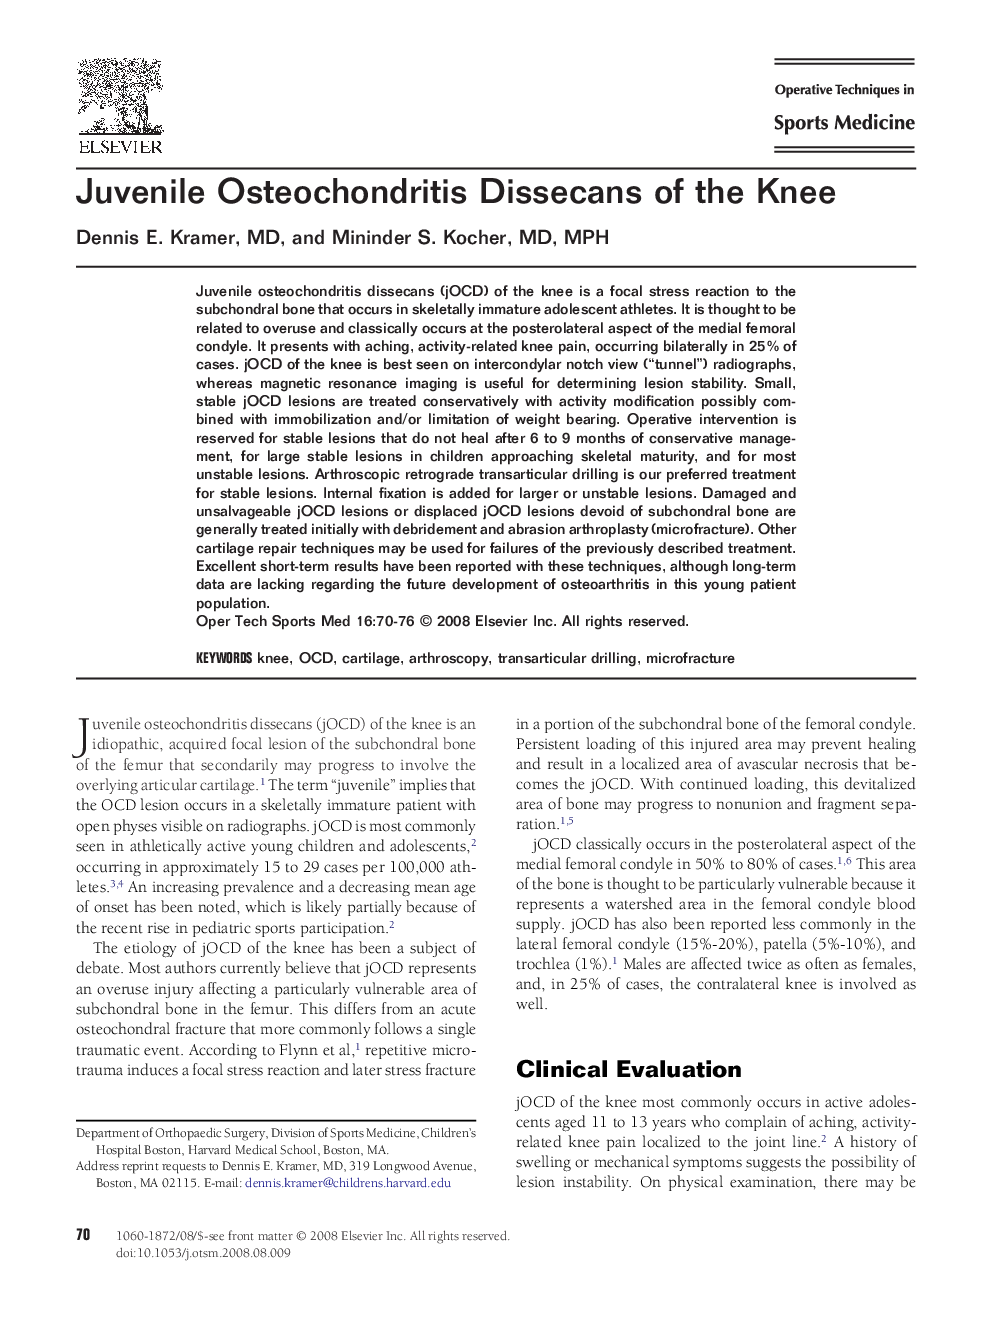 Juvenile Osteochondritis Dissecans of the Knee